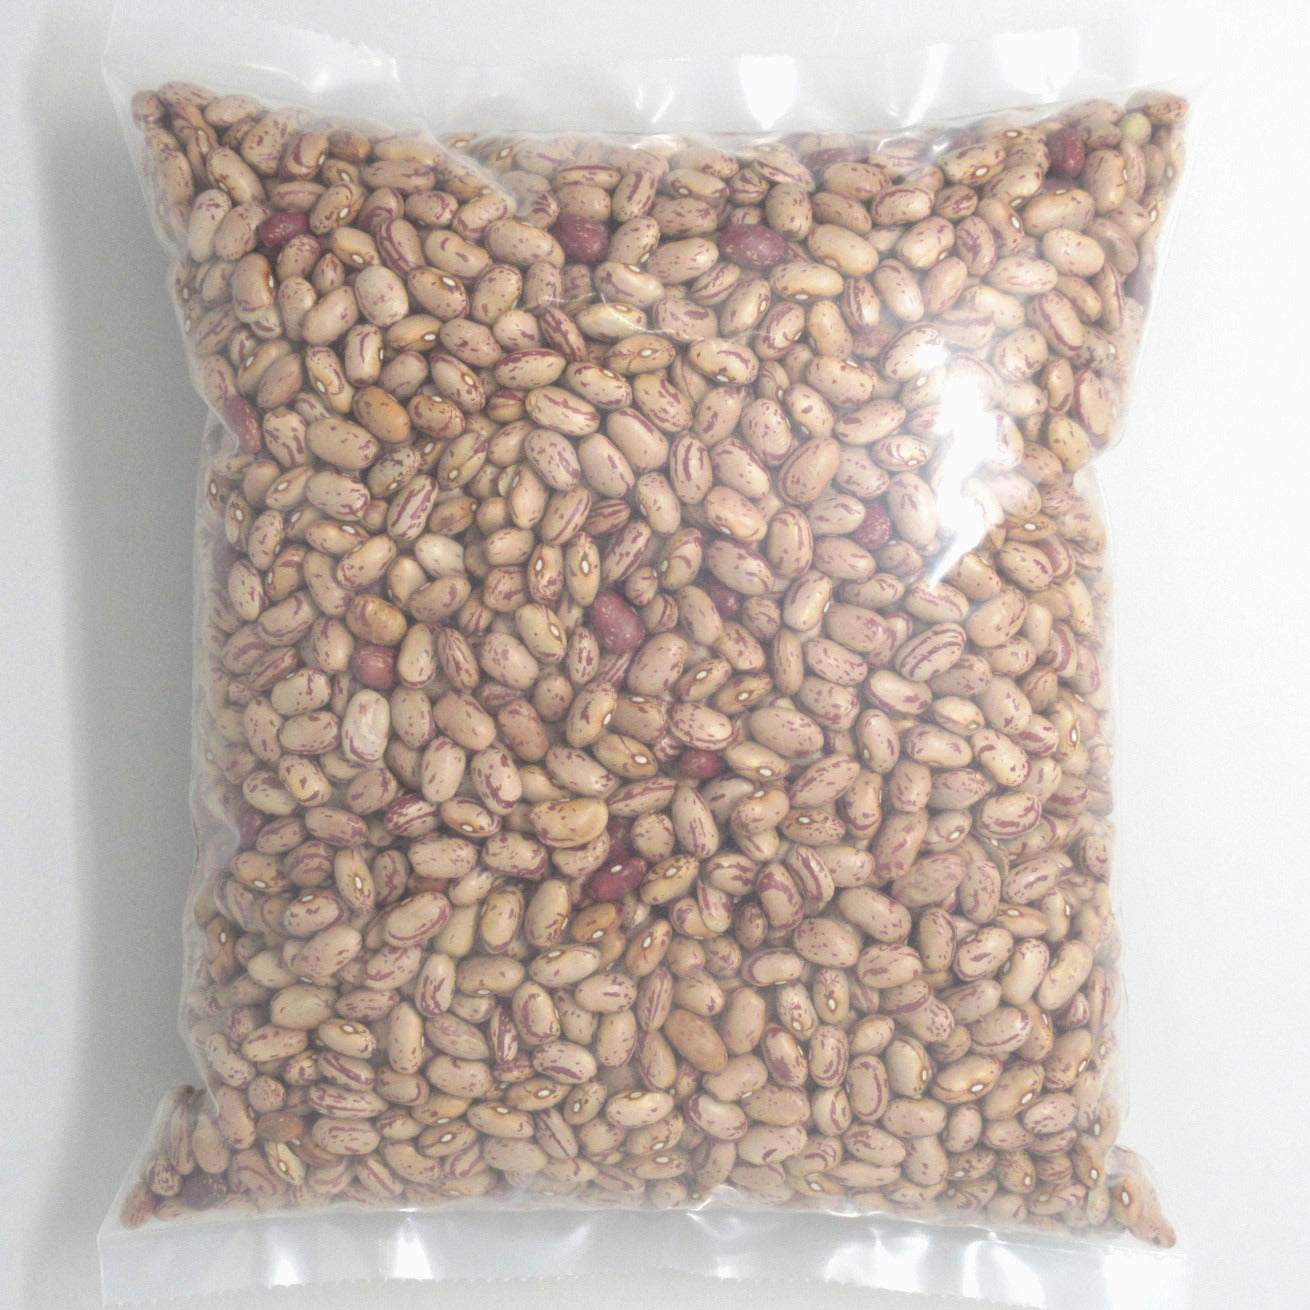 Flour Barrel product image - Romano Beans